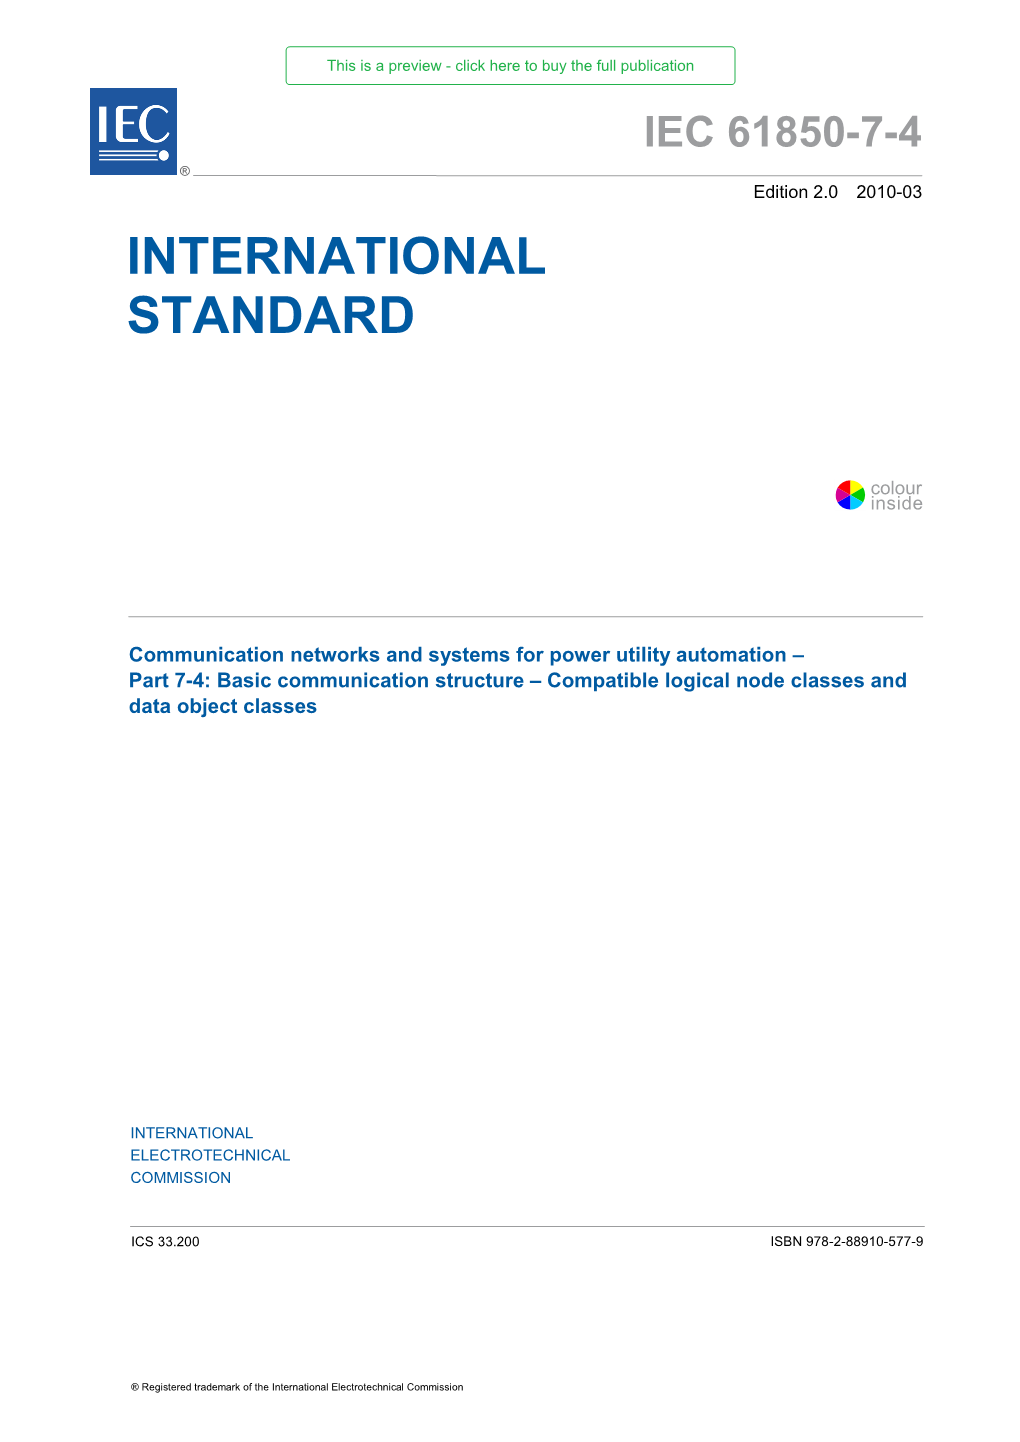 IEC 61850-7-4 ® Edition 2.0 2010-03 INTERNATIONAL STANDARD